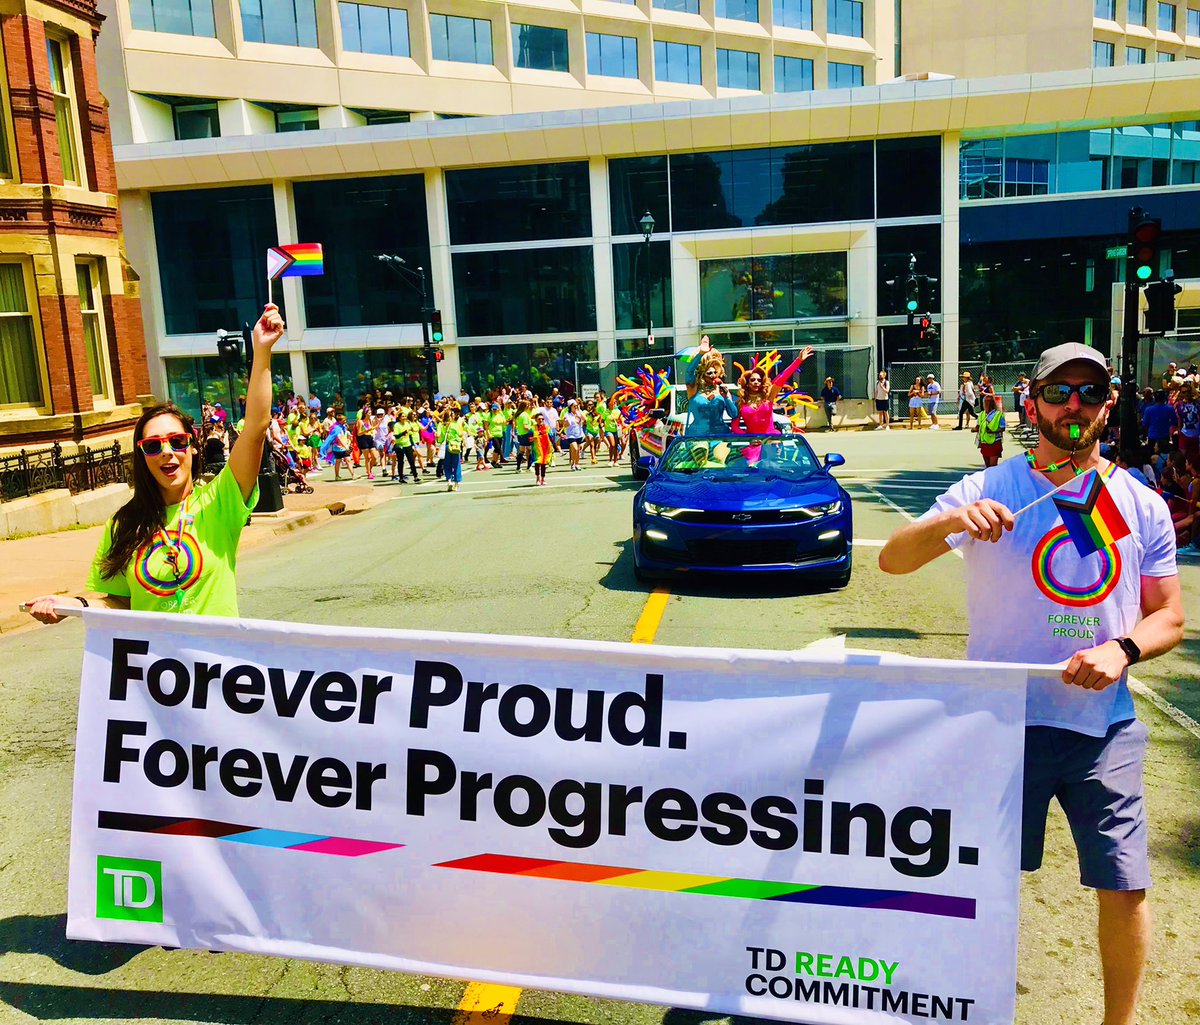 Halifax Pride Moments 🌈🌈🌈#ForeverProud #ForeverProgressing #Thereadycommitment @HalifaxPride @halifaxnoise @StephTennant26 @AshleyMartell4 @paulbway @TinaFMurphy @JakeGaudet_TD @olliver_td @m_teaghan @DevaStation_37 @JakeRafuse @Banque_TD @TD_Canada @JoshHakk_TD @GrantMinish